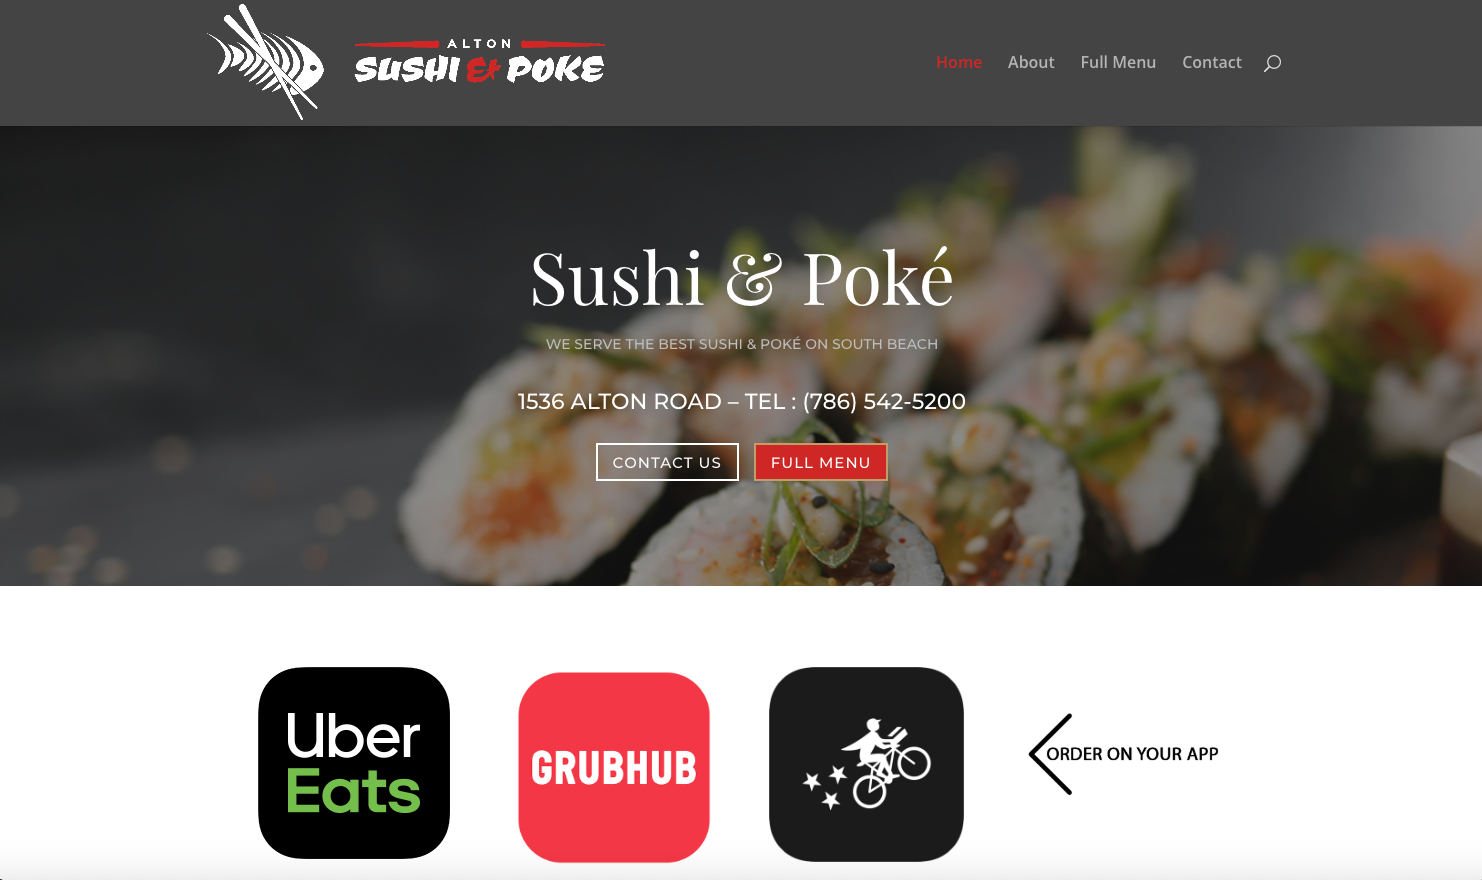 Alton Sushi & Poke Website Homepage